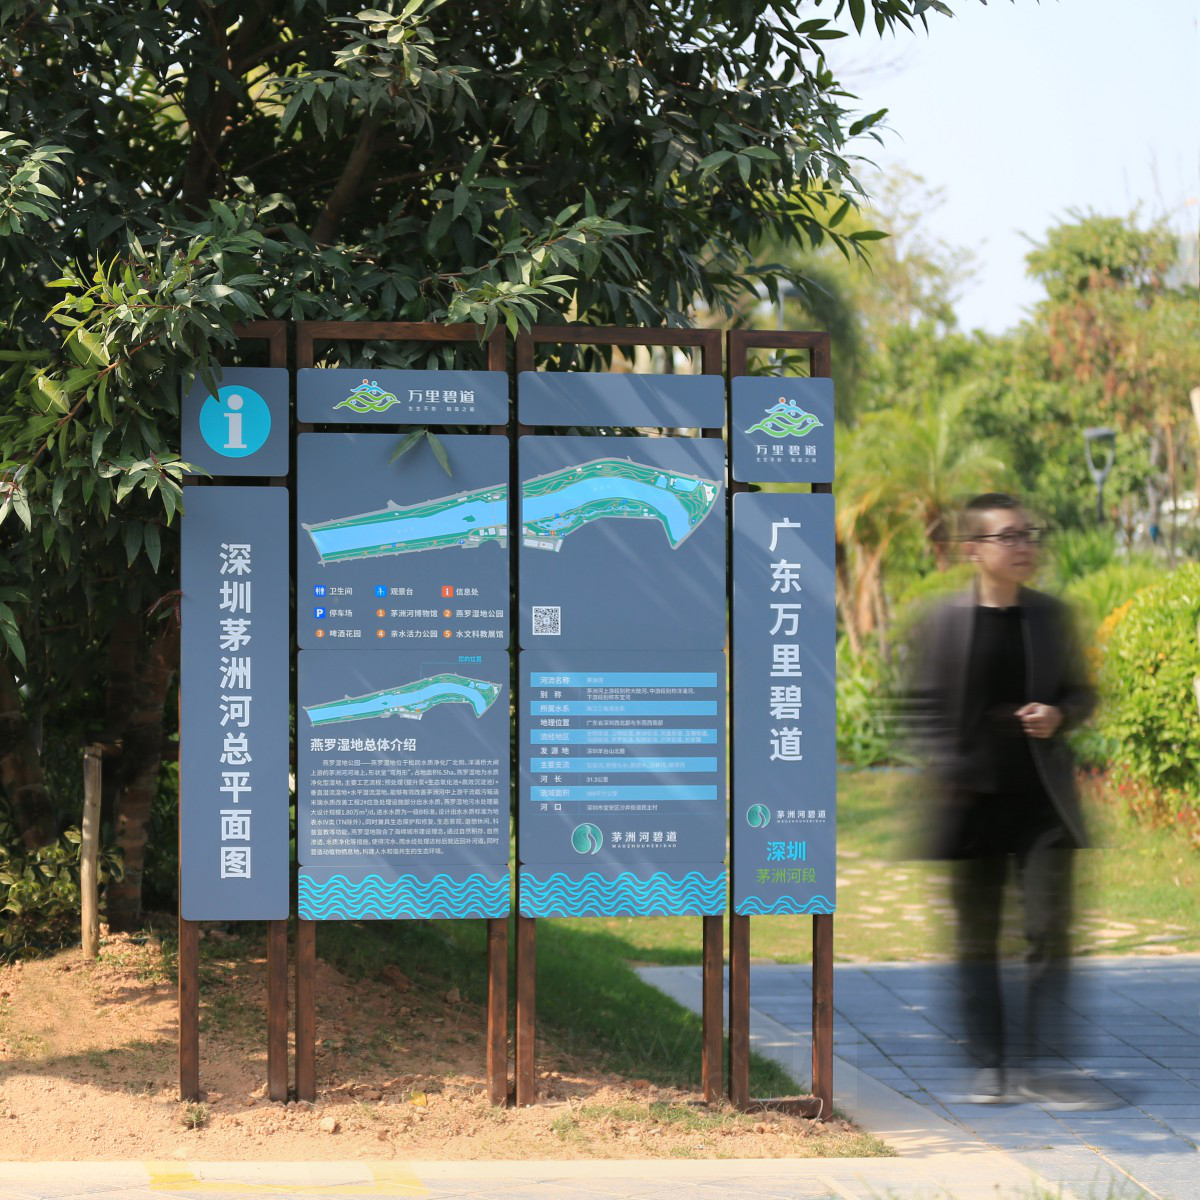 Guangdong Ecological Belt